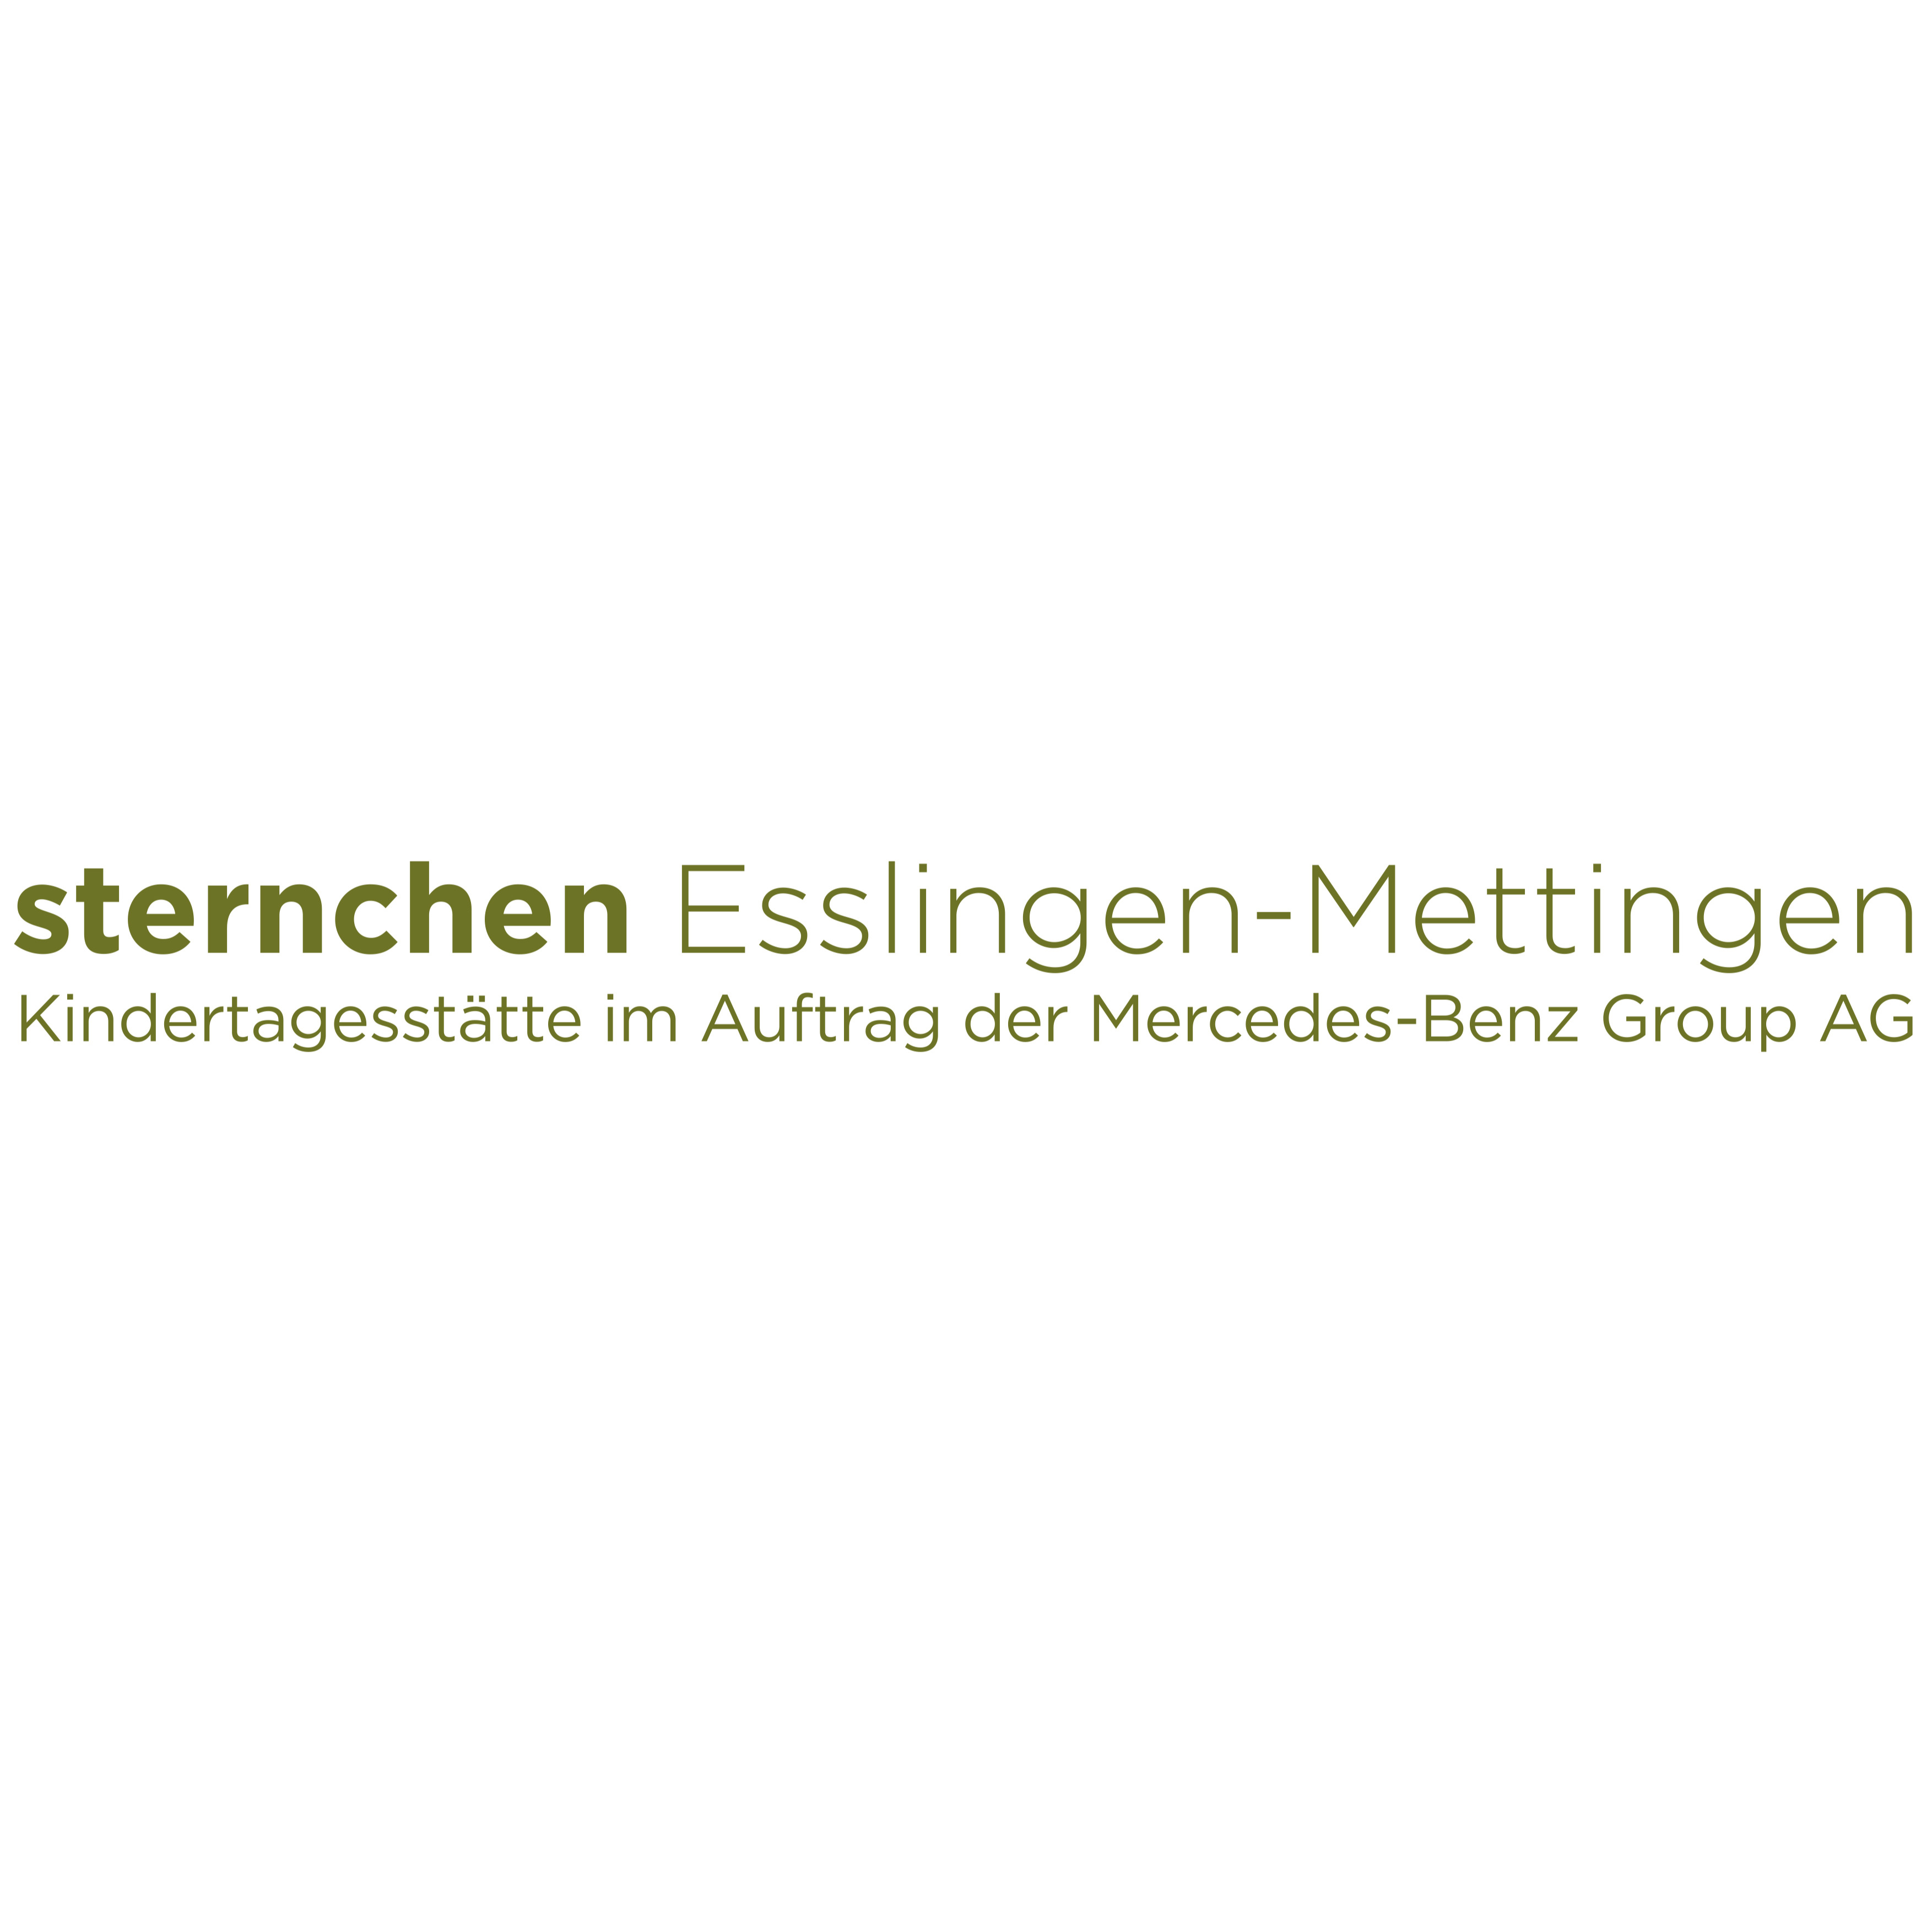 sternchen - pme Familienservice in Esslingen am Neckar - Logo